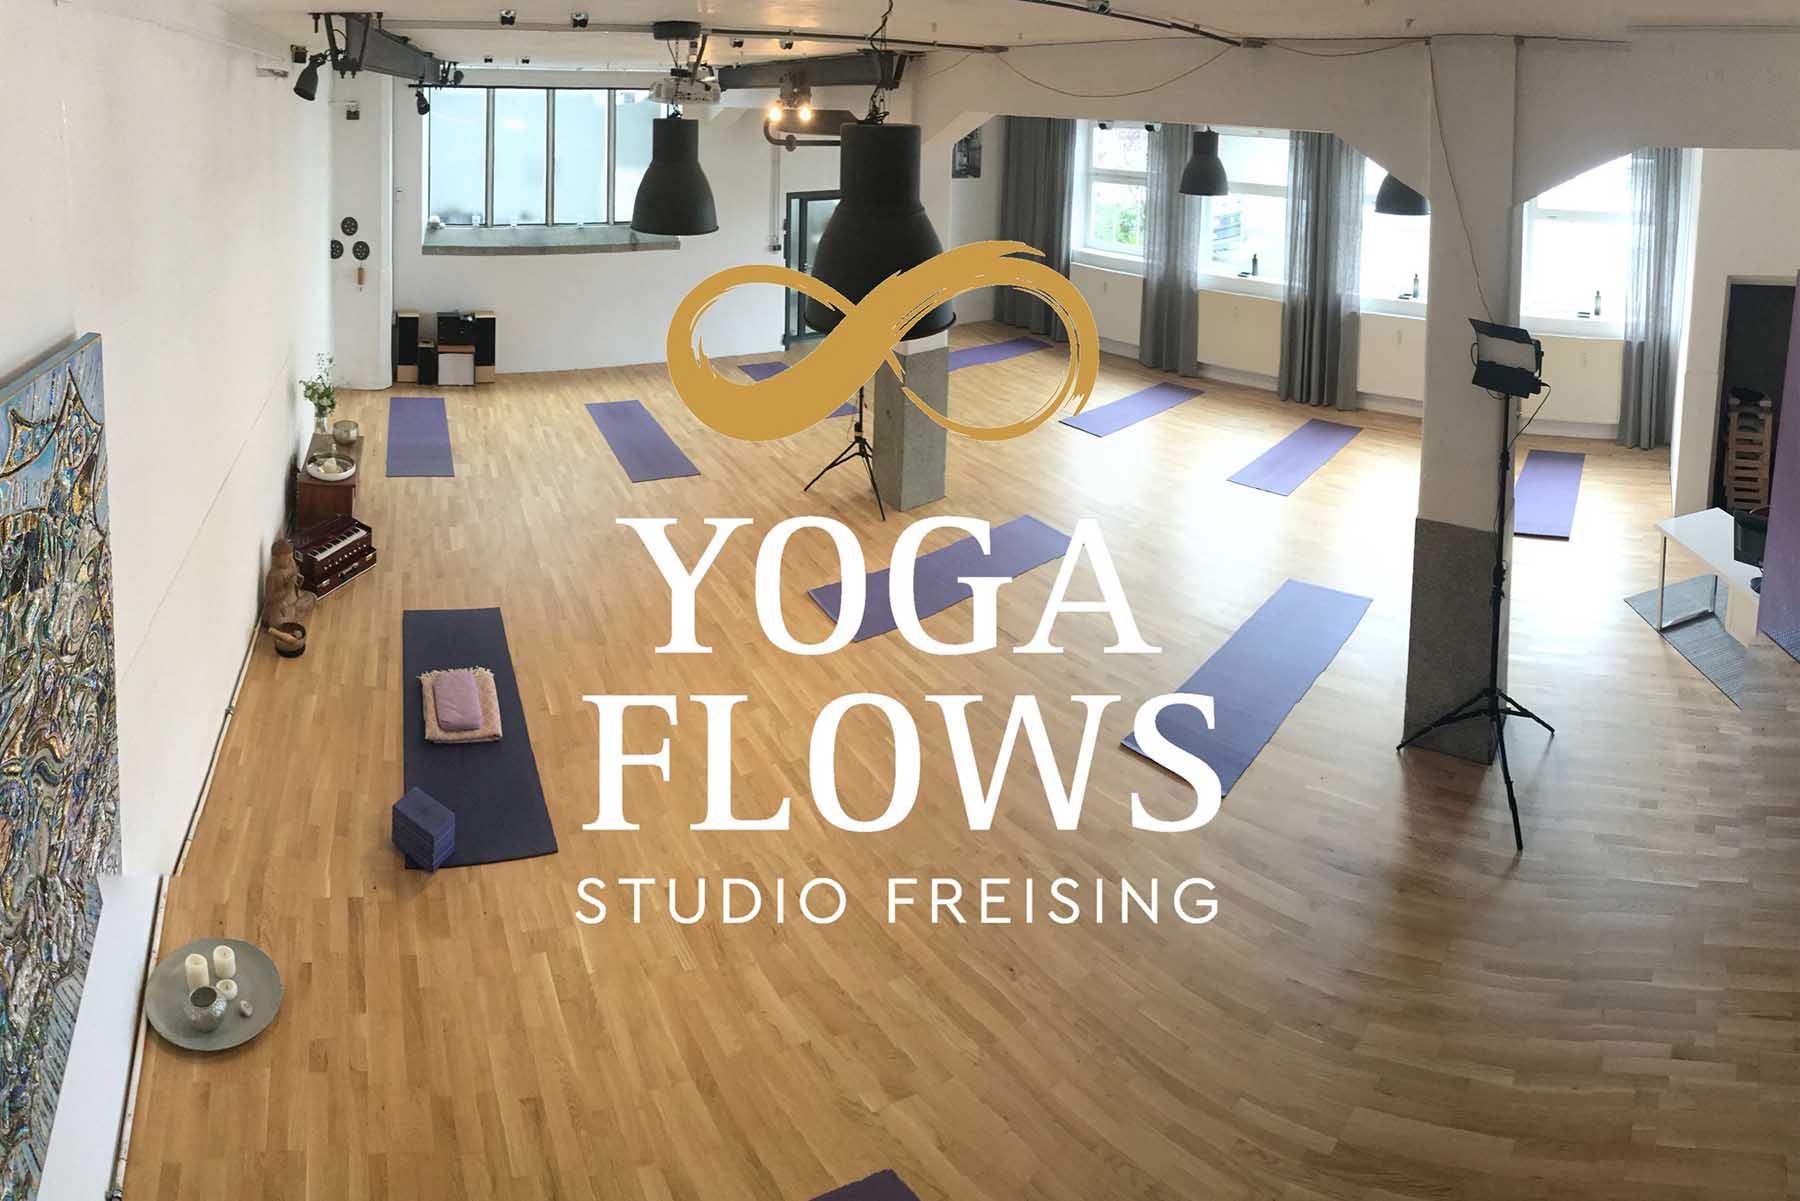 Yogastudio Raum Yogaflows Freising